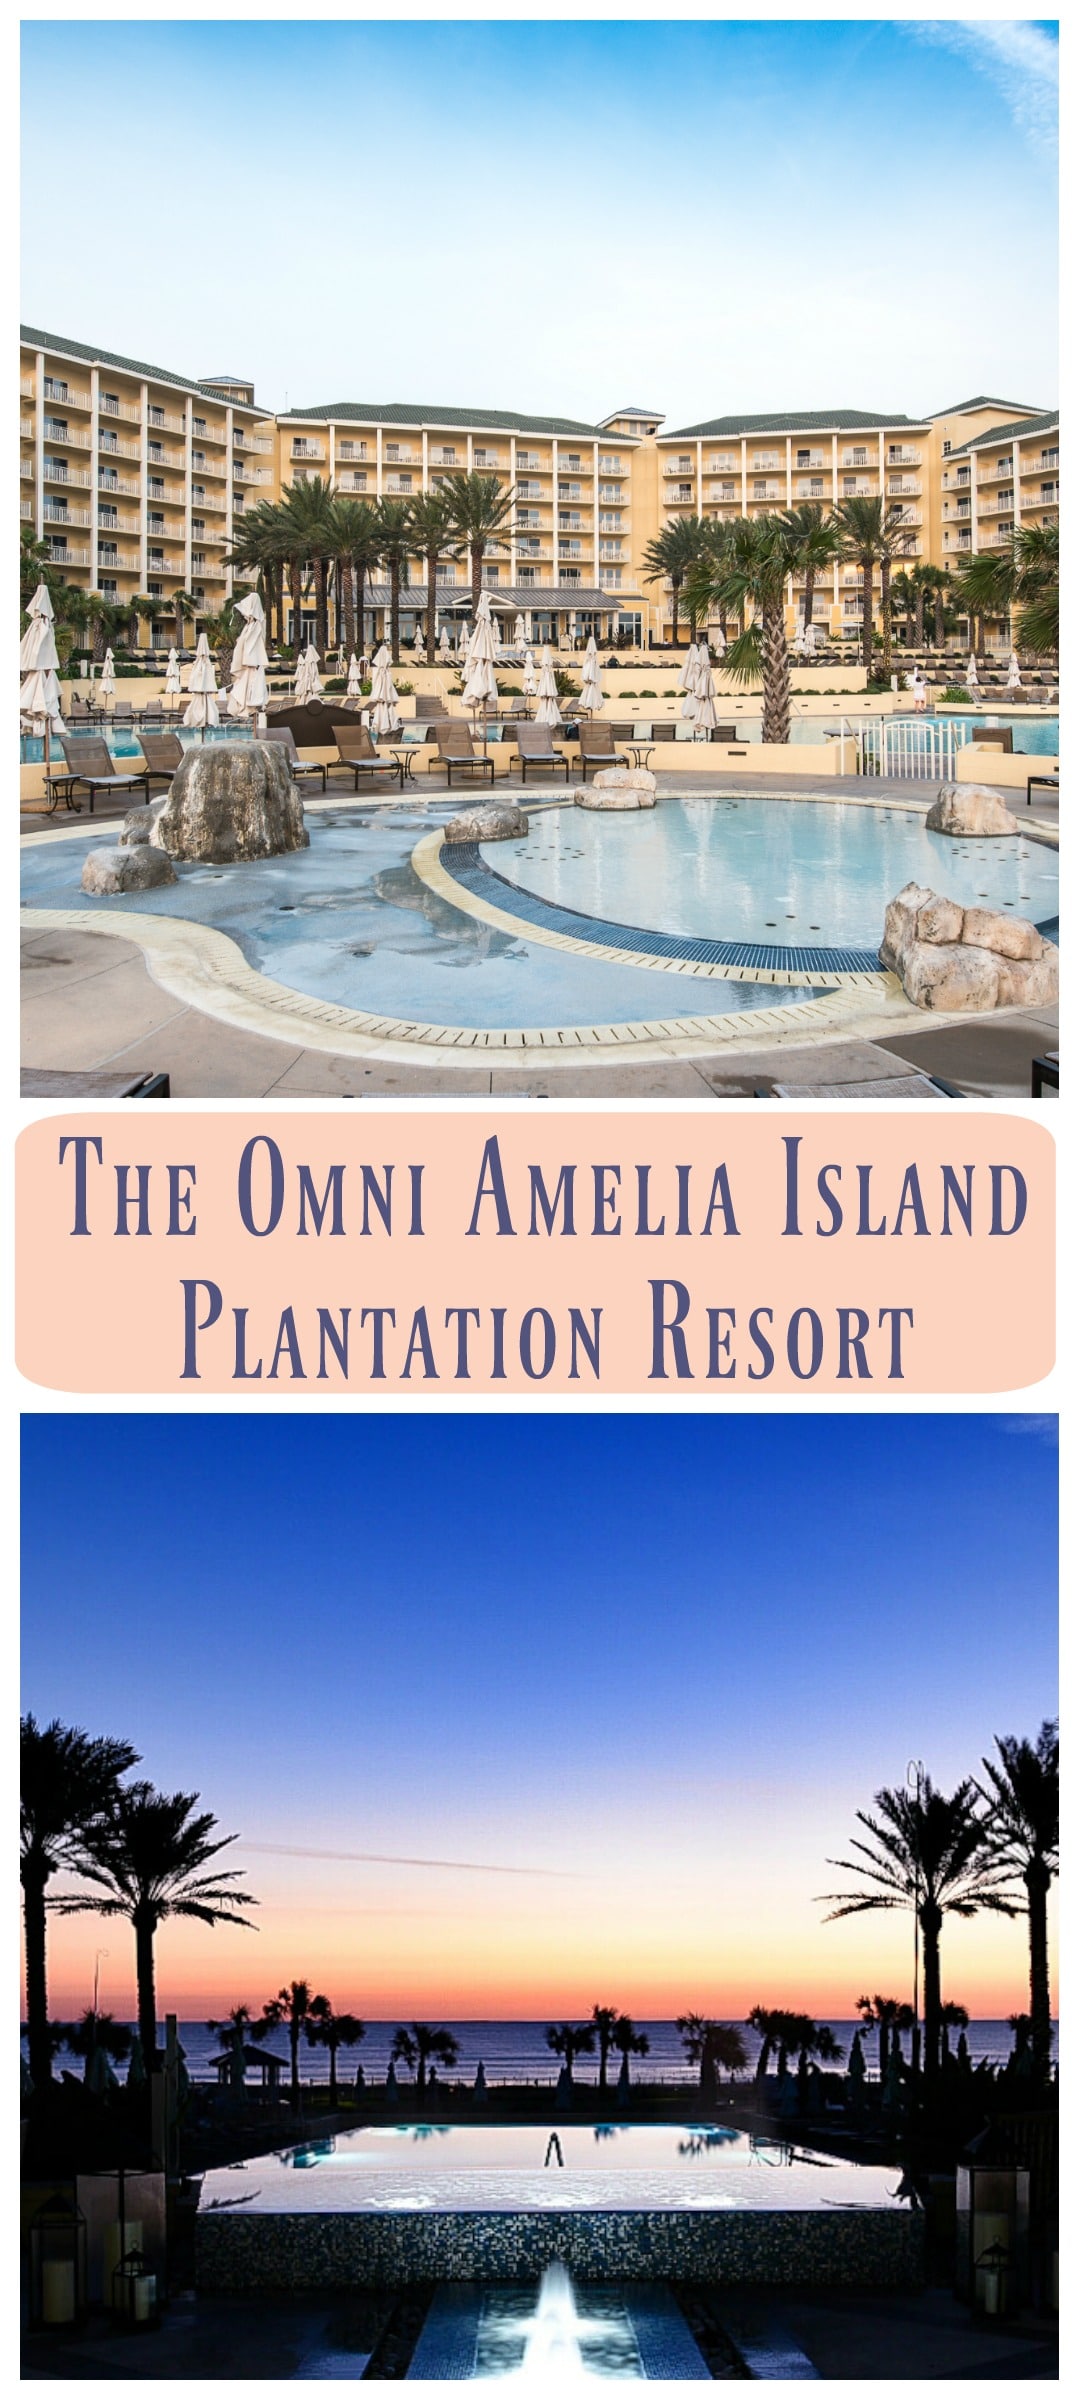 Omni Amelia Island Plantation Resort